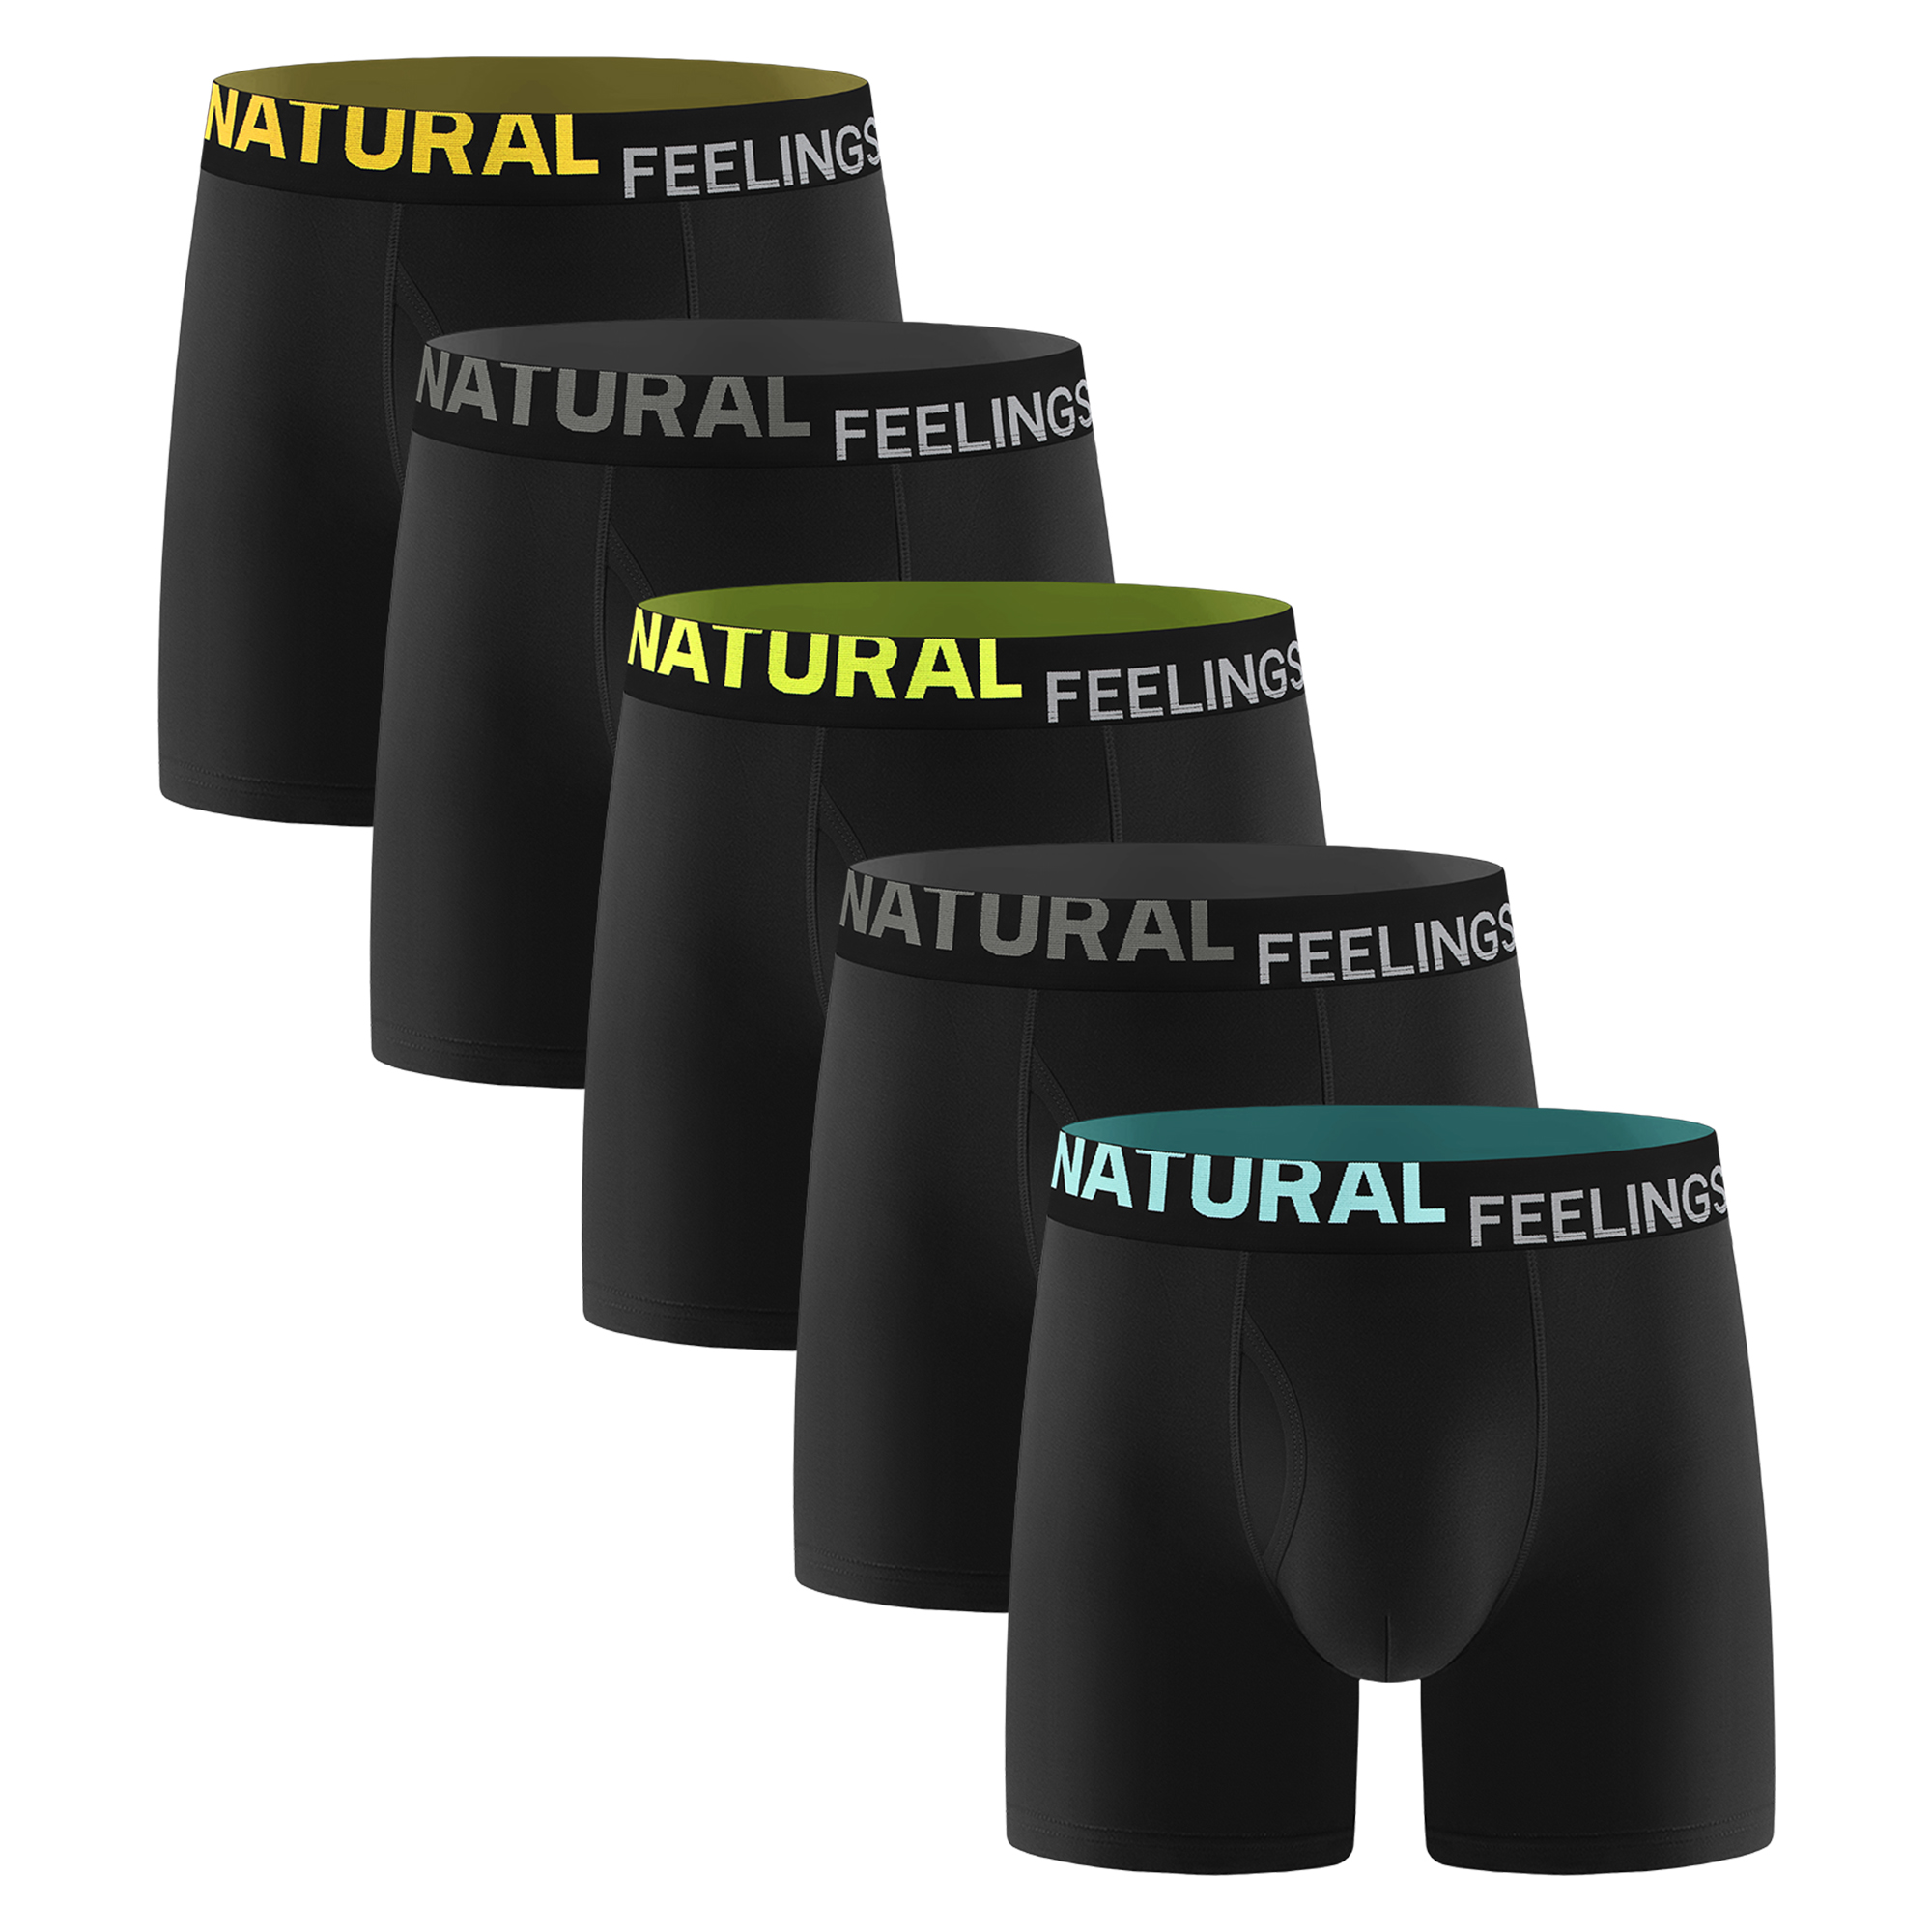 Natural Feelings Boxer Briefs Mens Underwear Men Pack Soft Cotton Open Fly Underwear - image 1 of 3